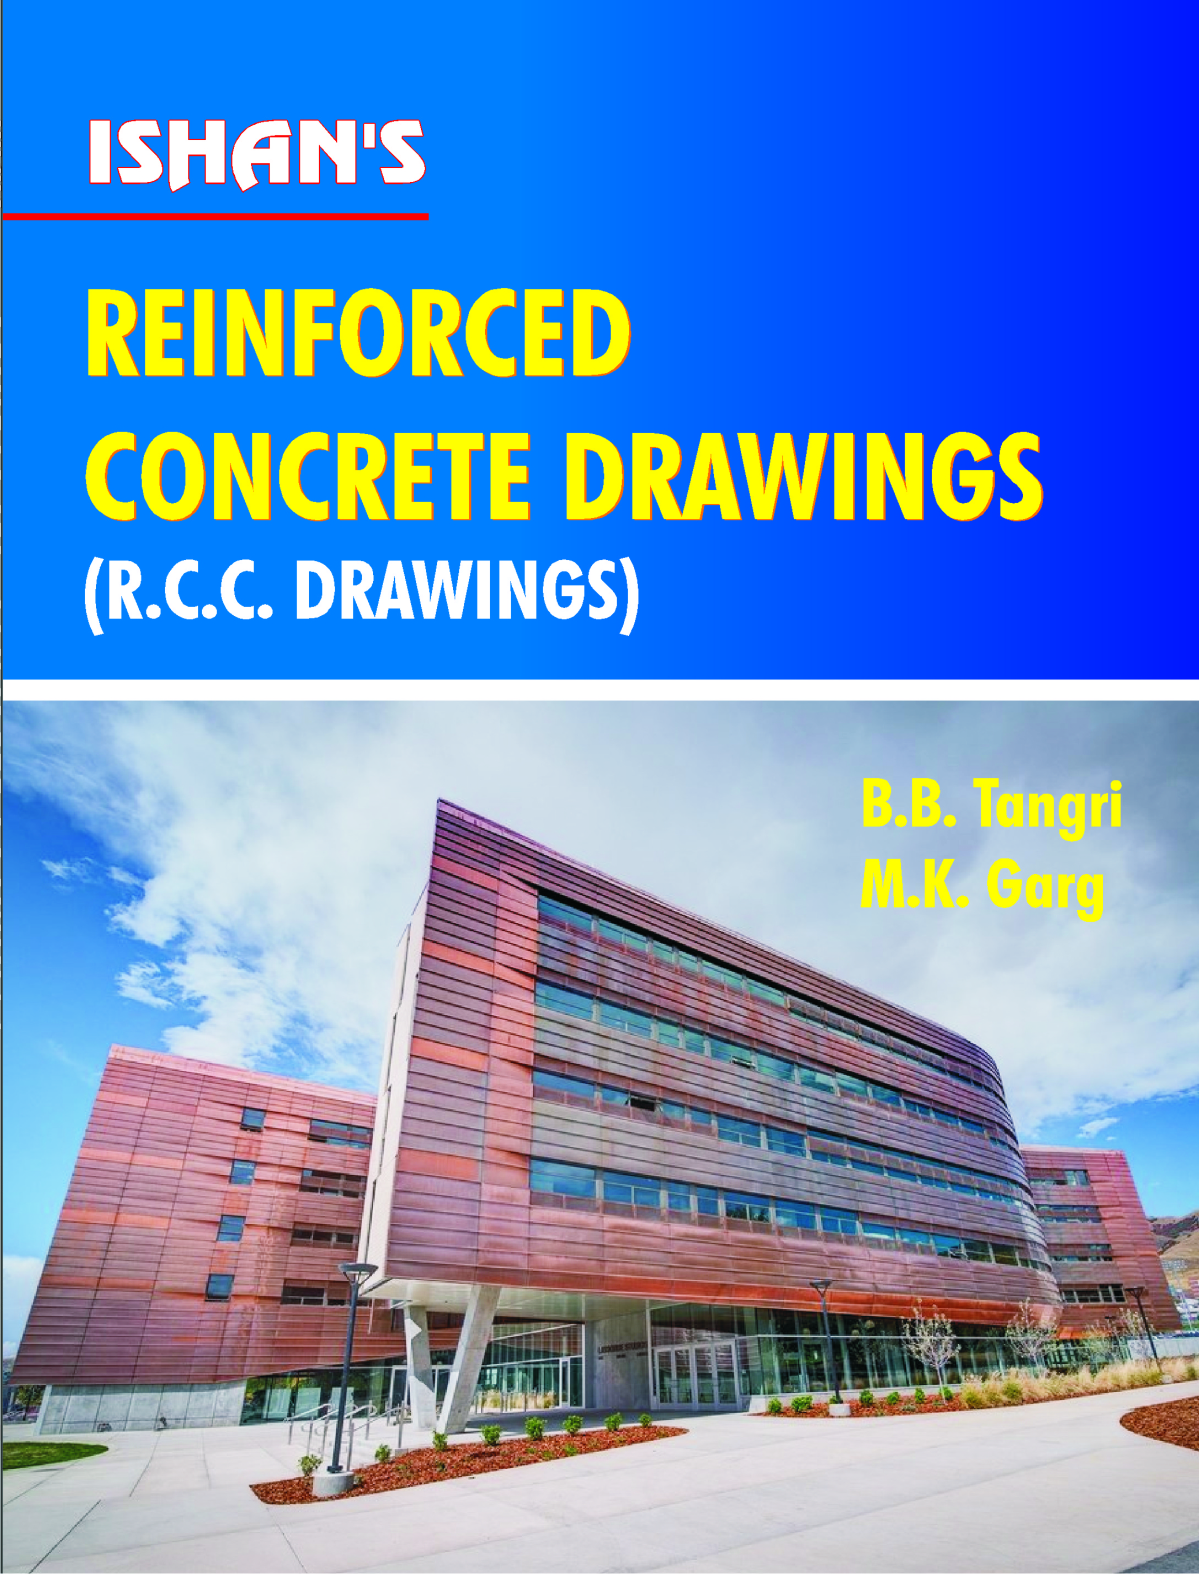 R.C.C. Drawing